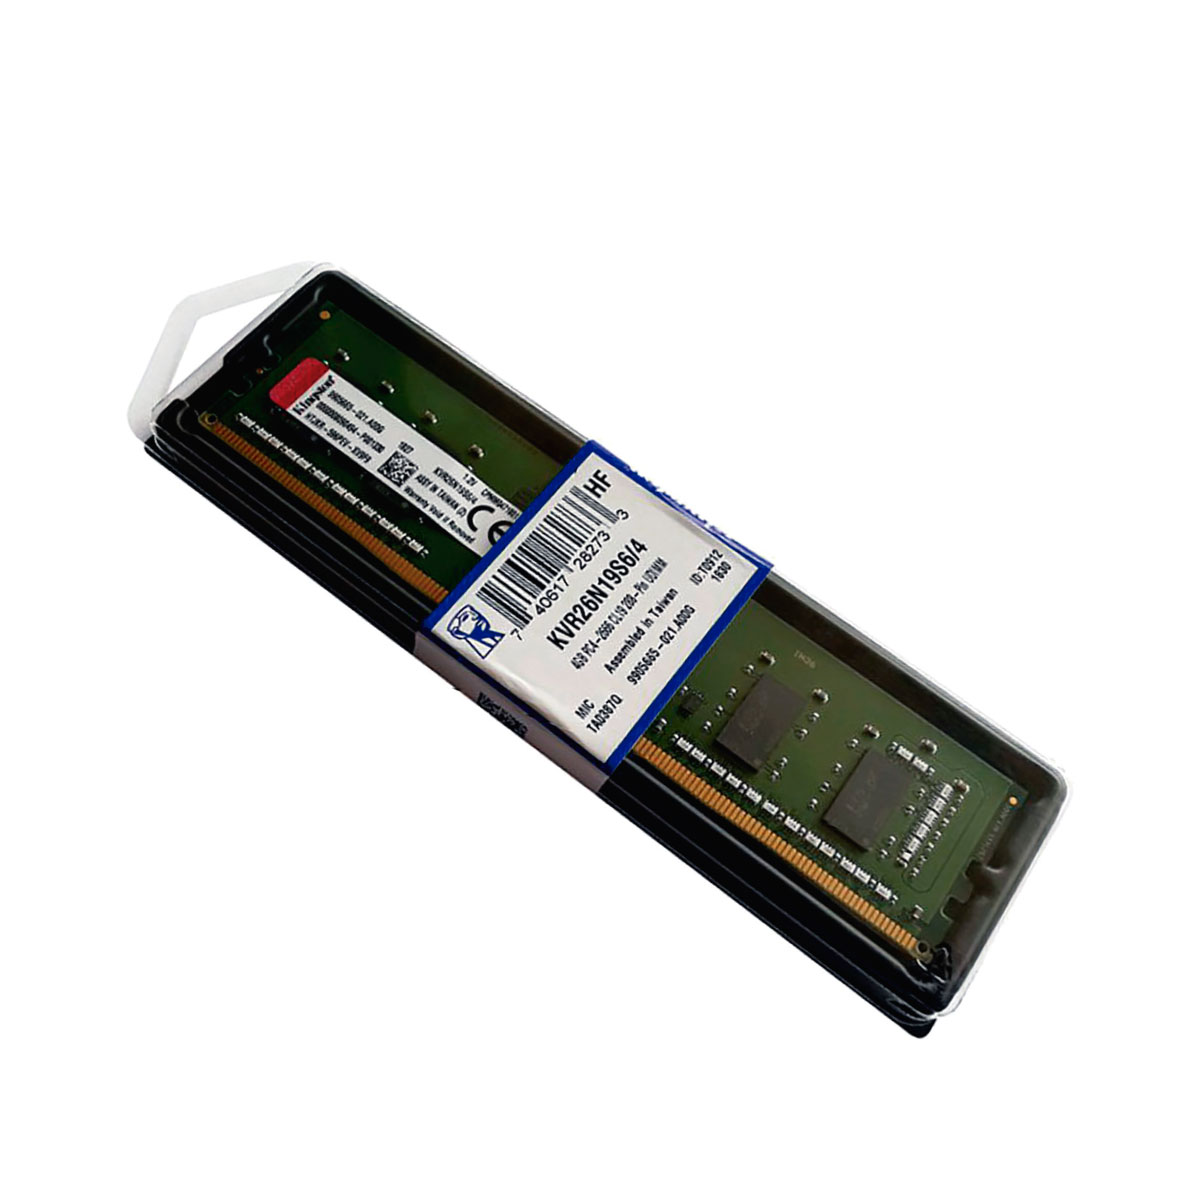 DIMM Kingston  DDR4 8Gb, 3200Mhz, 25600, CL22, 1.2V, sin bufer, Nuevo, 1 año de garantia